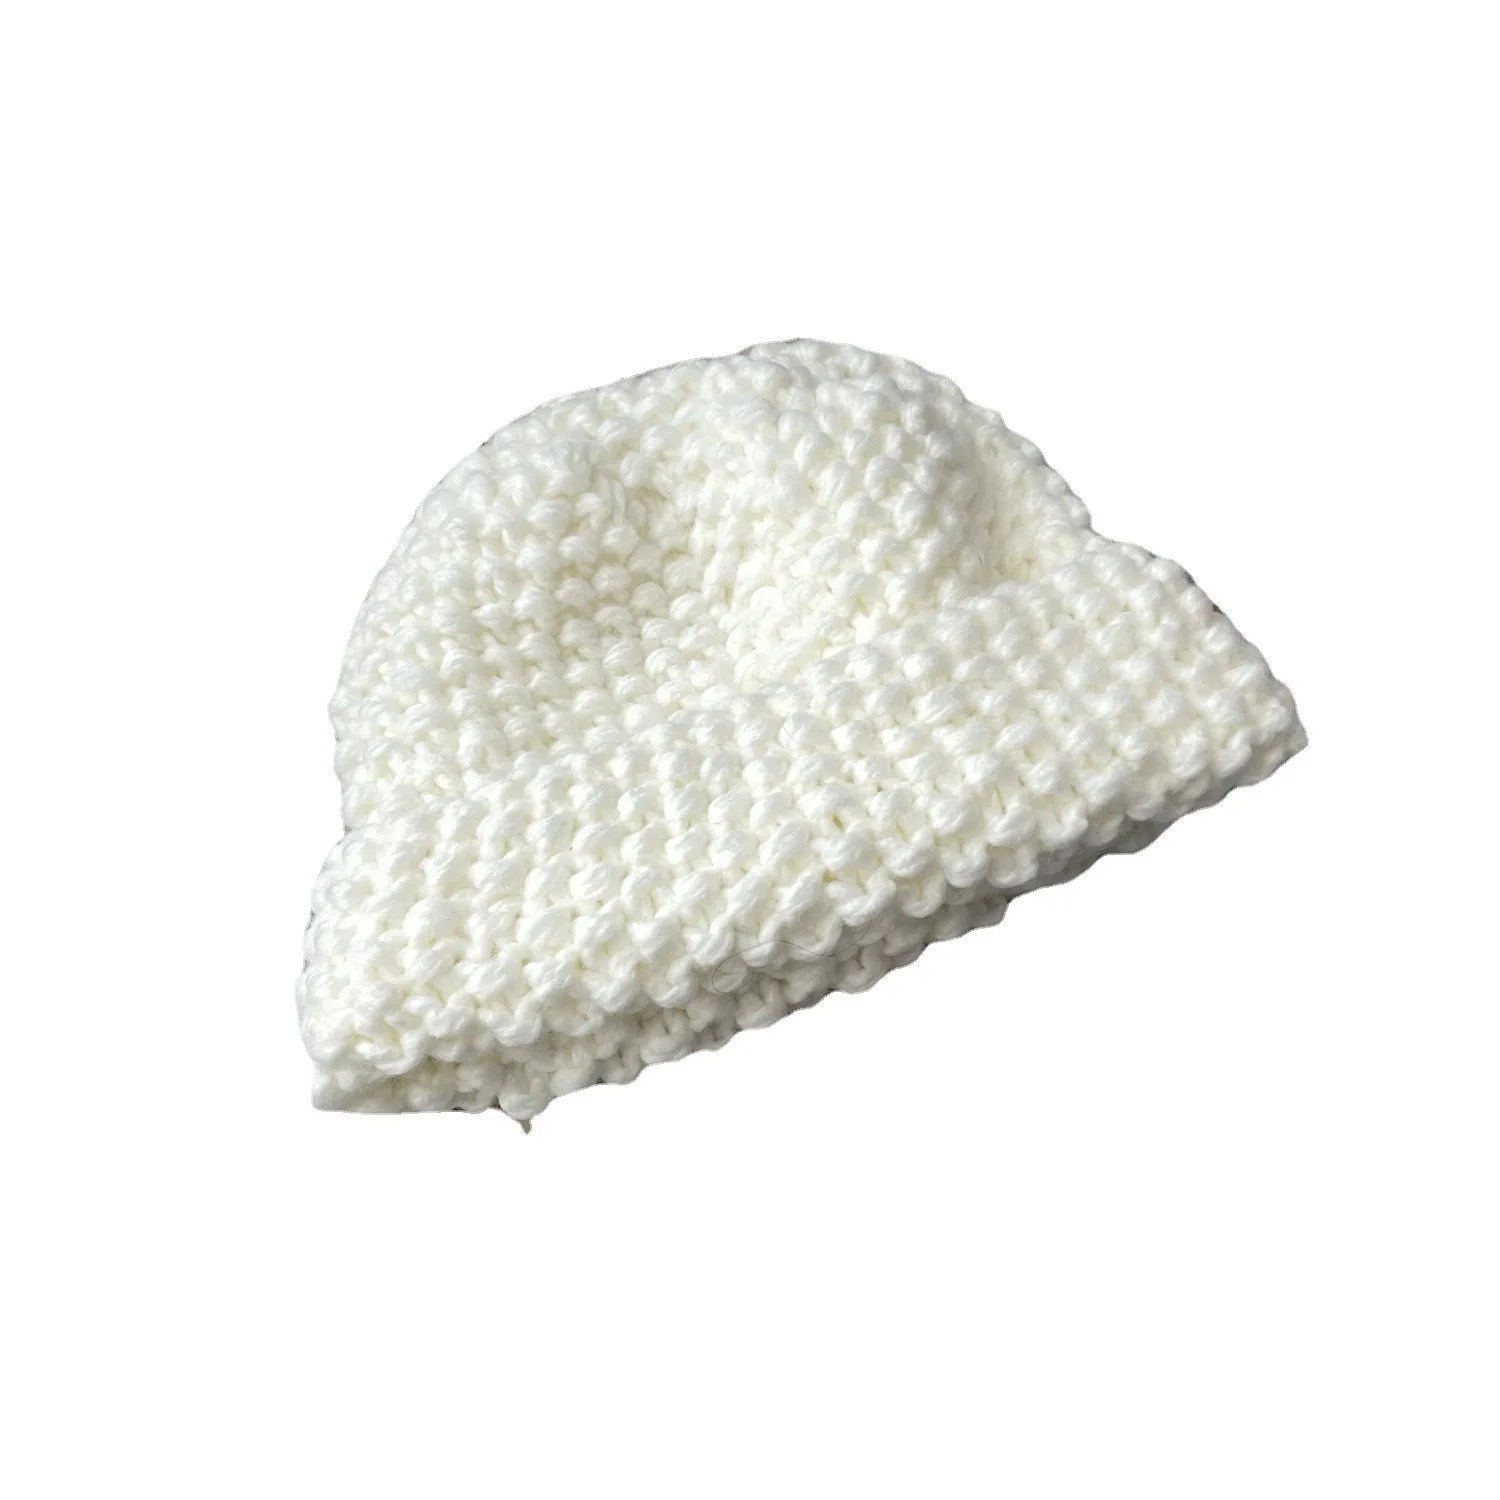 New Winter Beanie Hat for Women Knit Cap Fashion Warm Thicken Cap Lady Thread Knitted Beanie Chapeau Female Bonnet шляпа женская